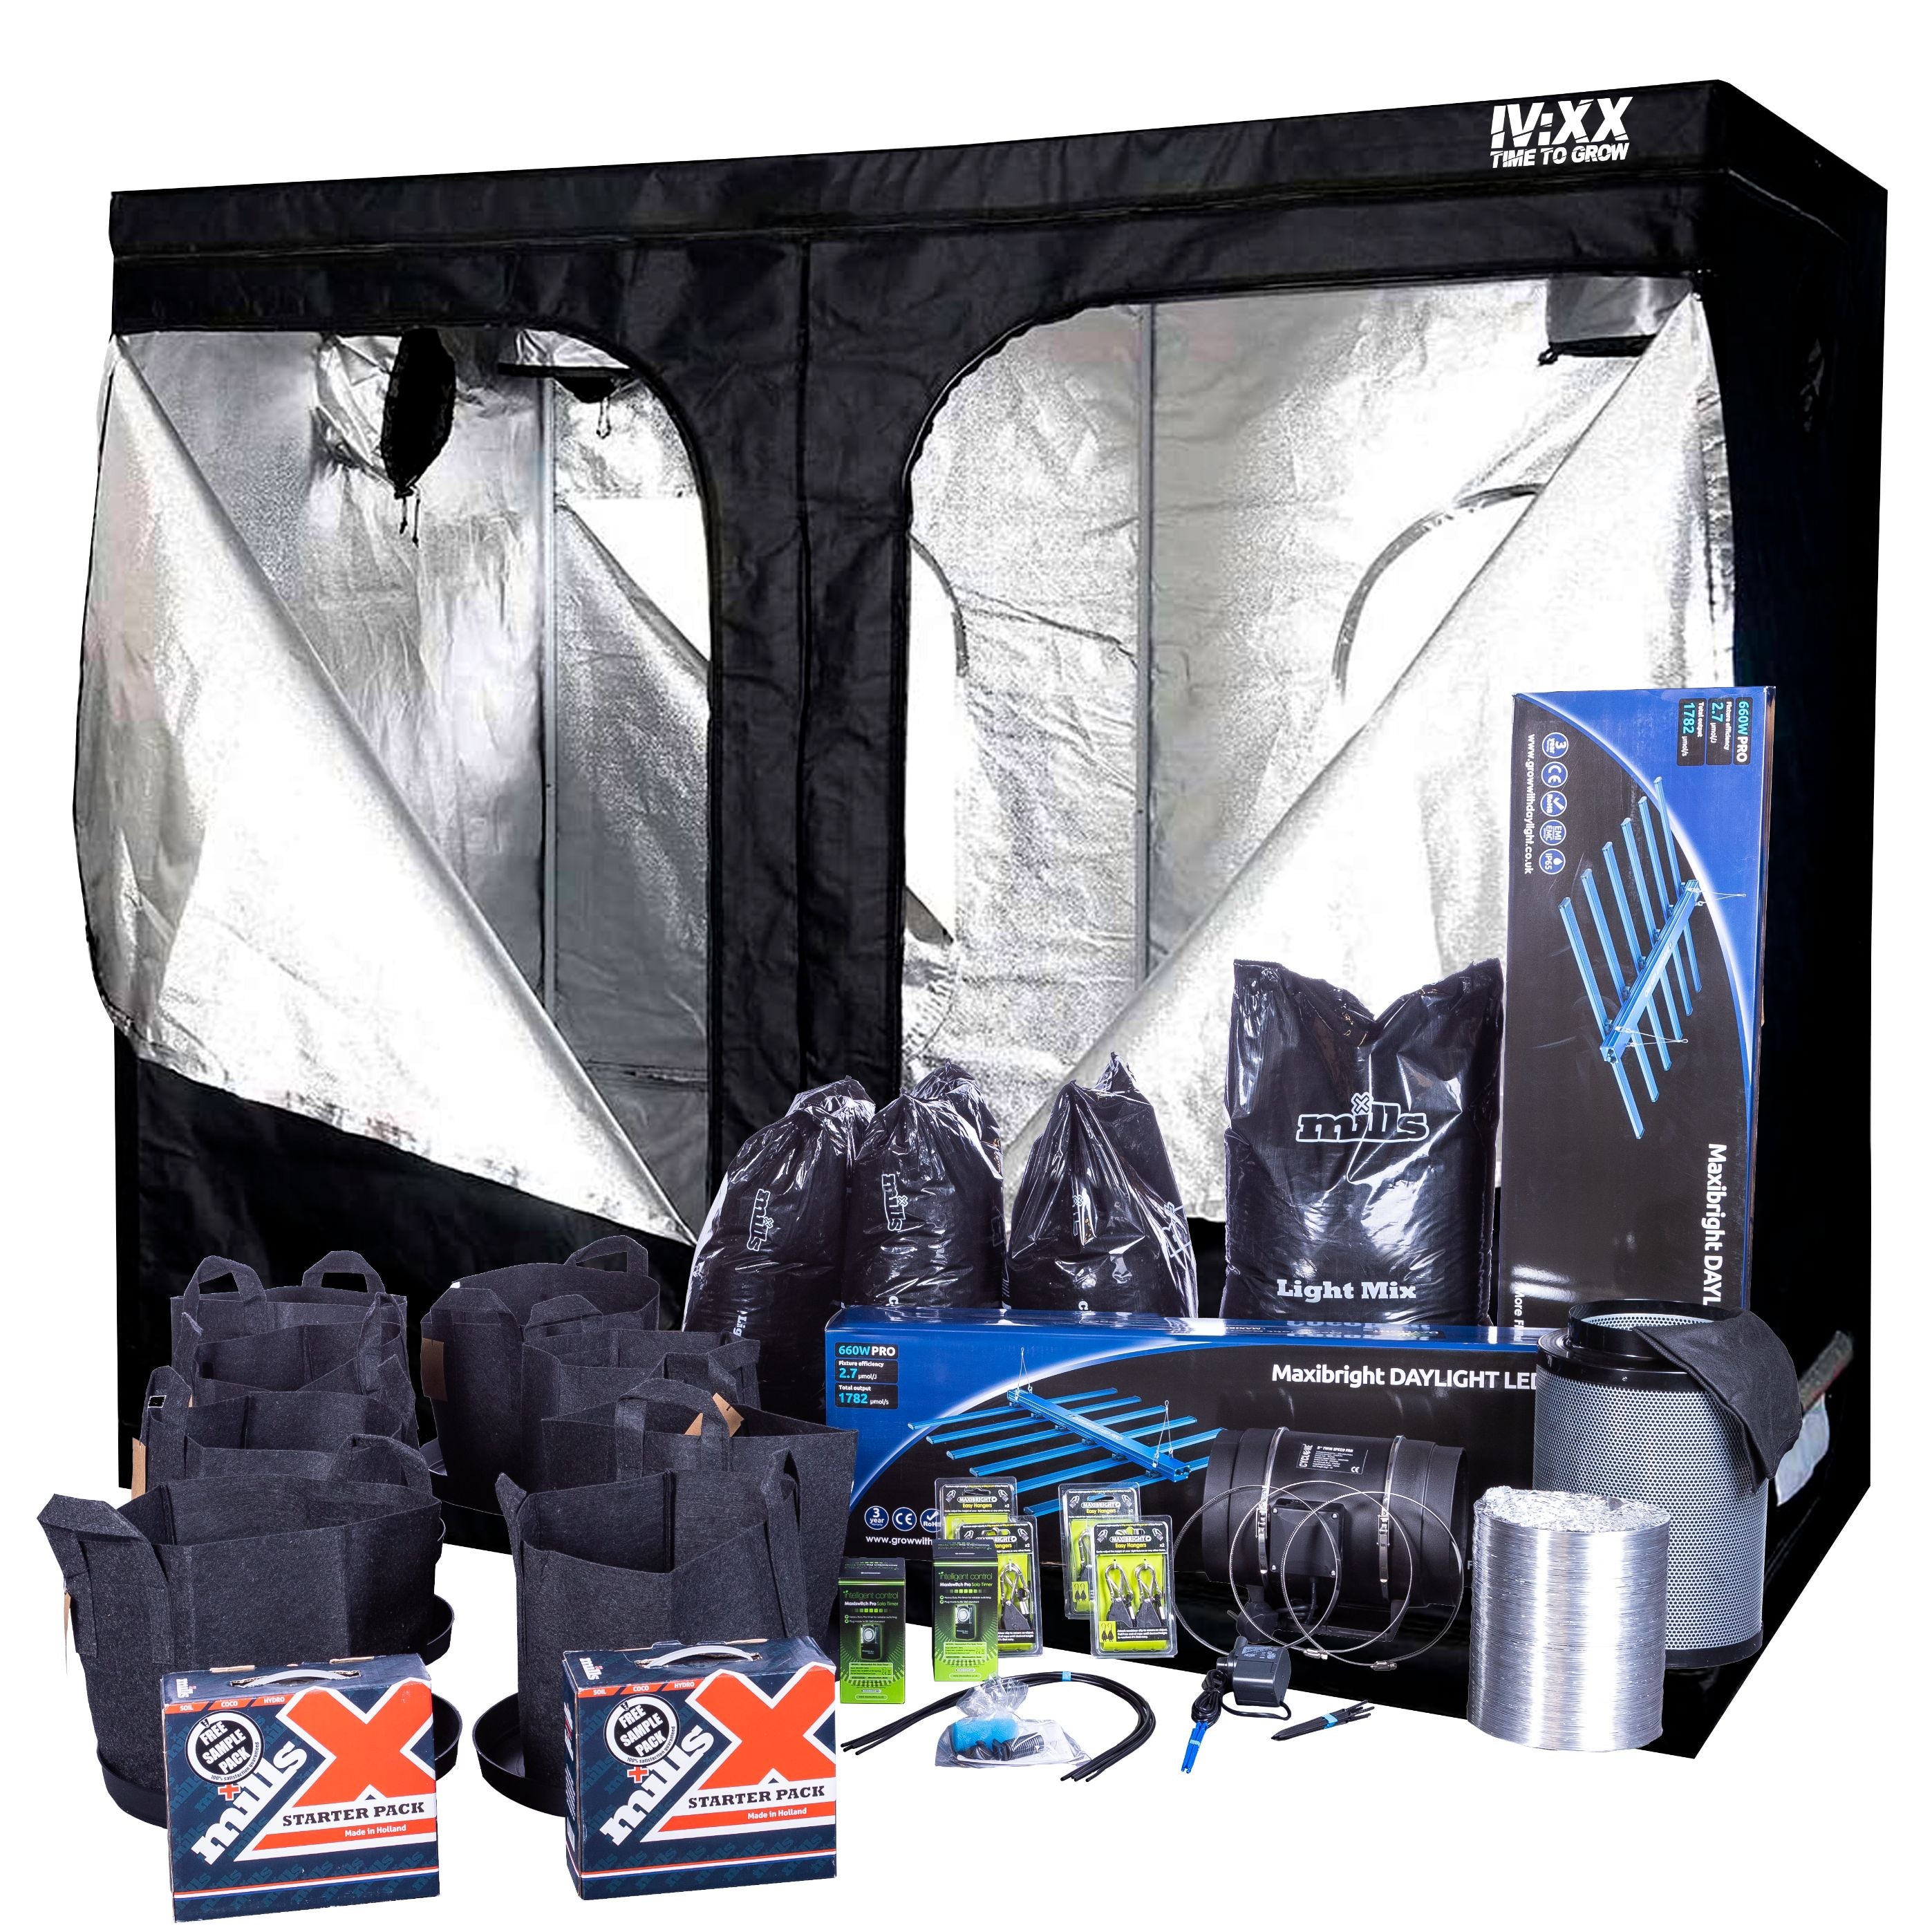 240cm LED Complete Tent Kit (Free Nutrients!)